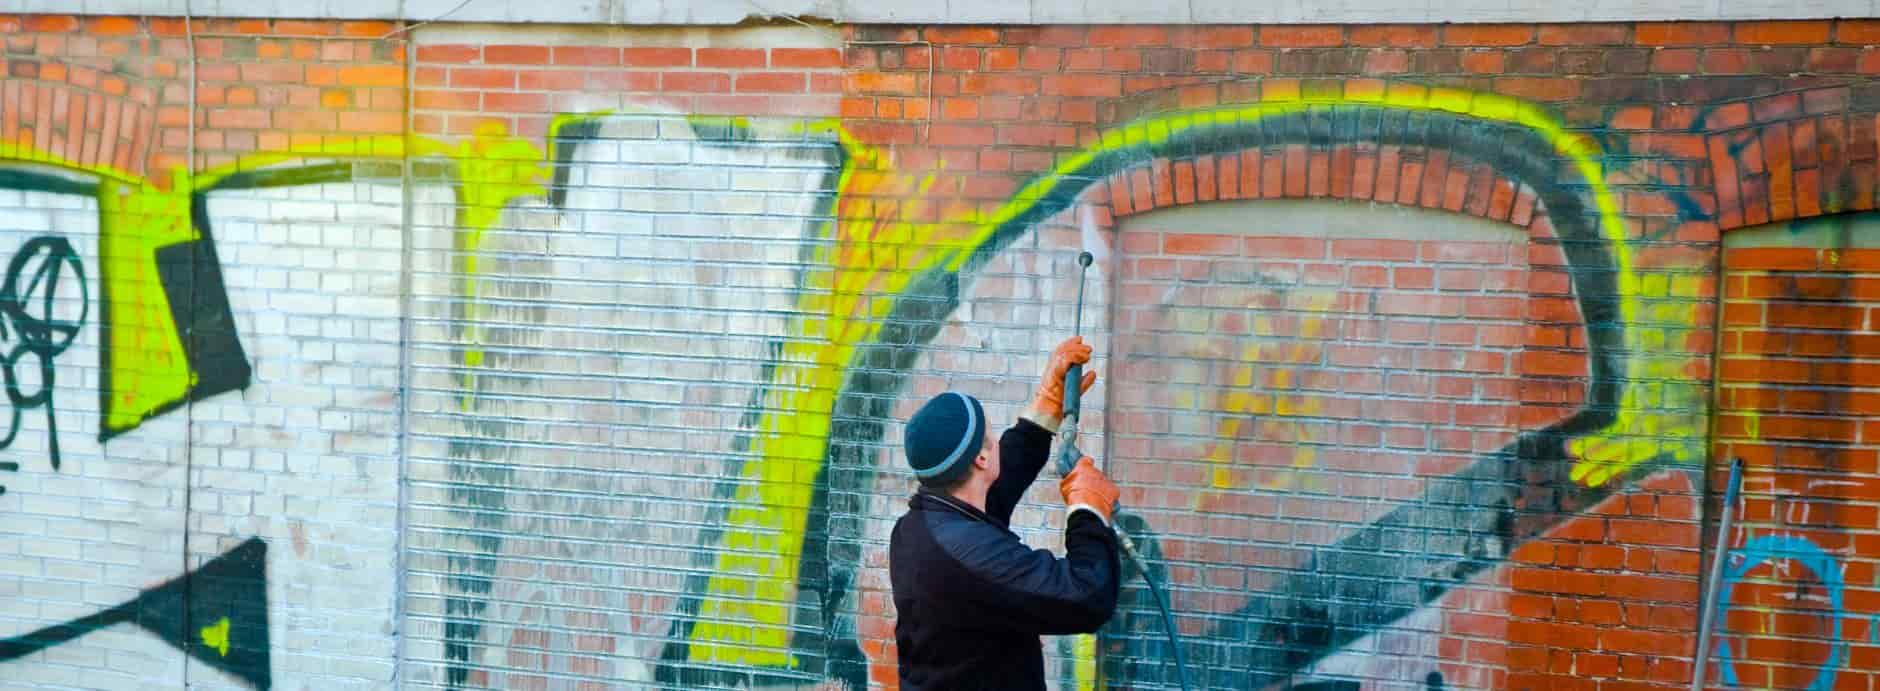 Graffiti Removal in Knaresborough